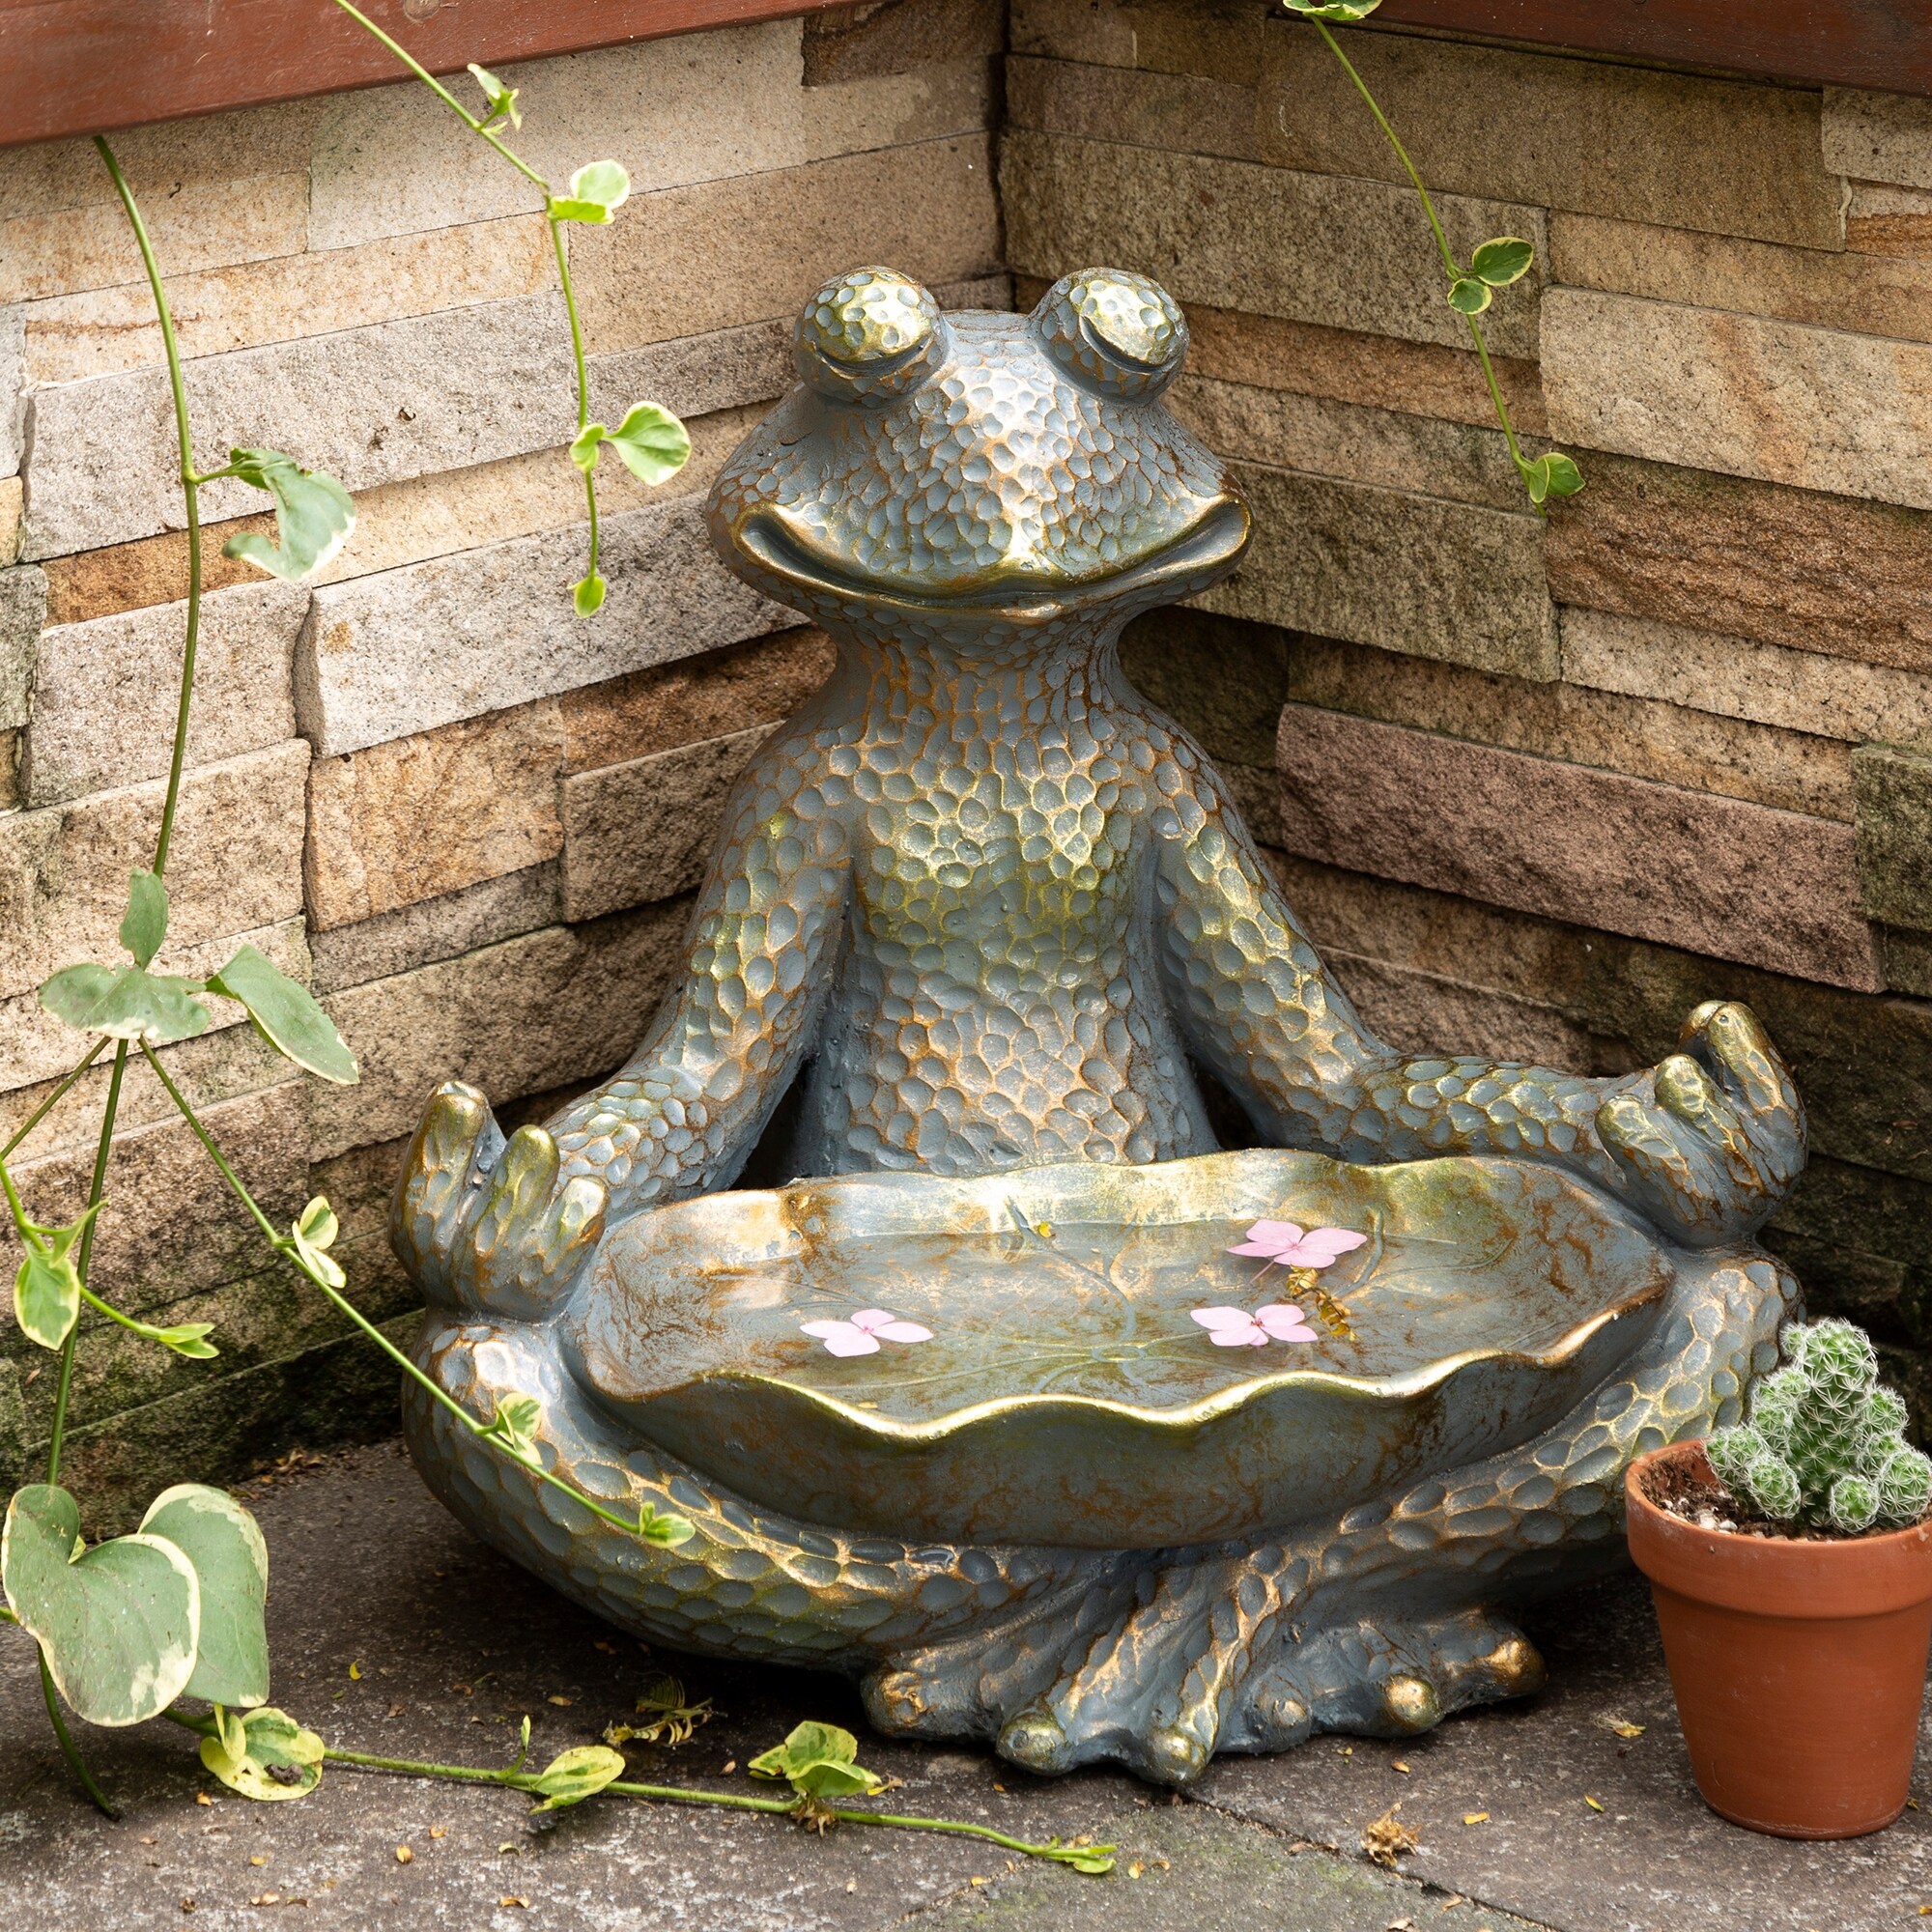 Glitzhome 14.25H Bronze Mgo Yoga Frog Figurine, Color: Gray